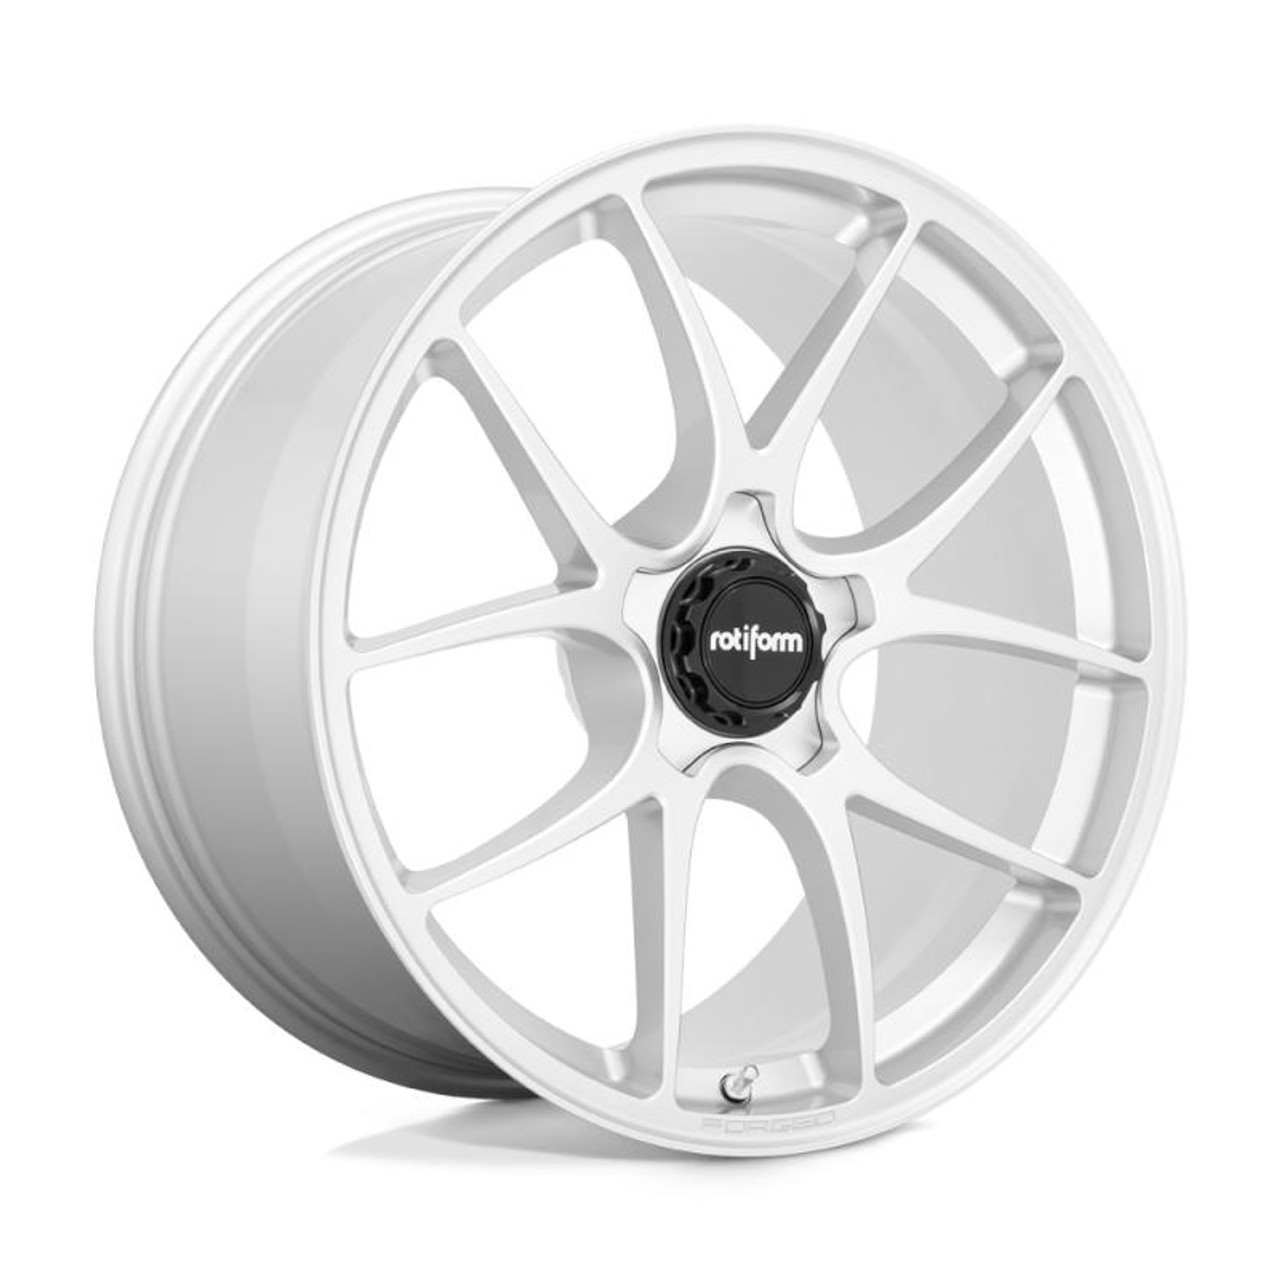  Rotiform R900 LTN Wheel 19x8.5 5x112 45 Offset - Gloss Silver - R900198547+45T 